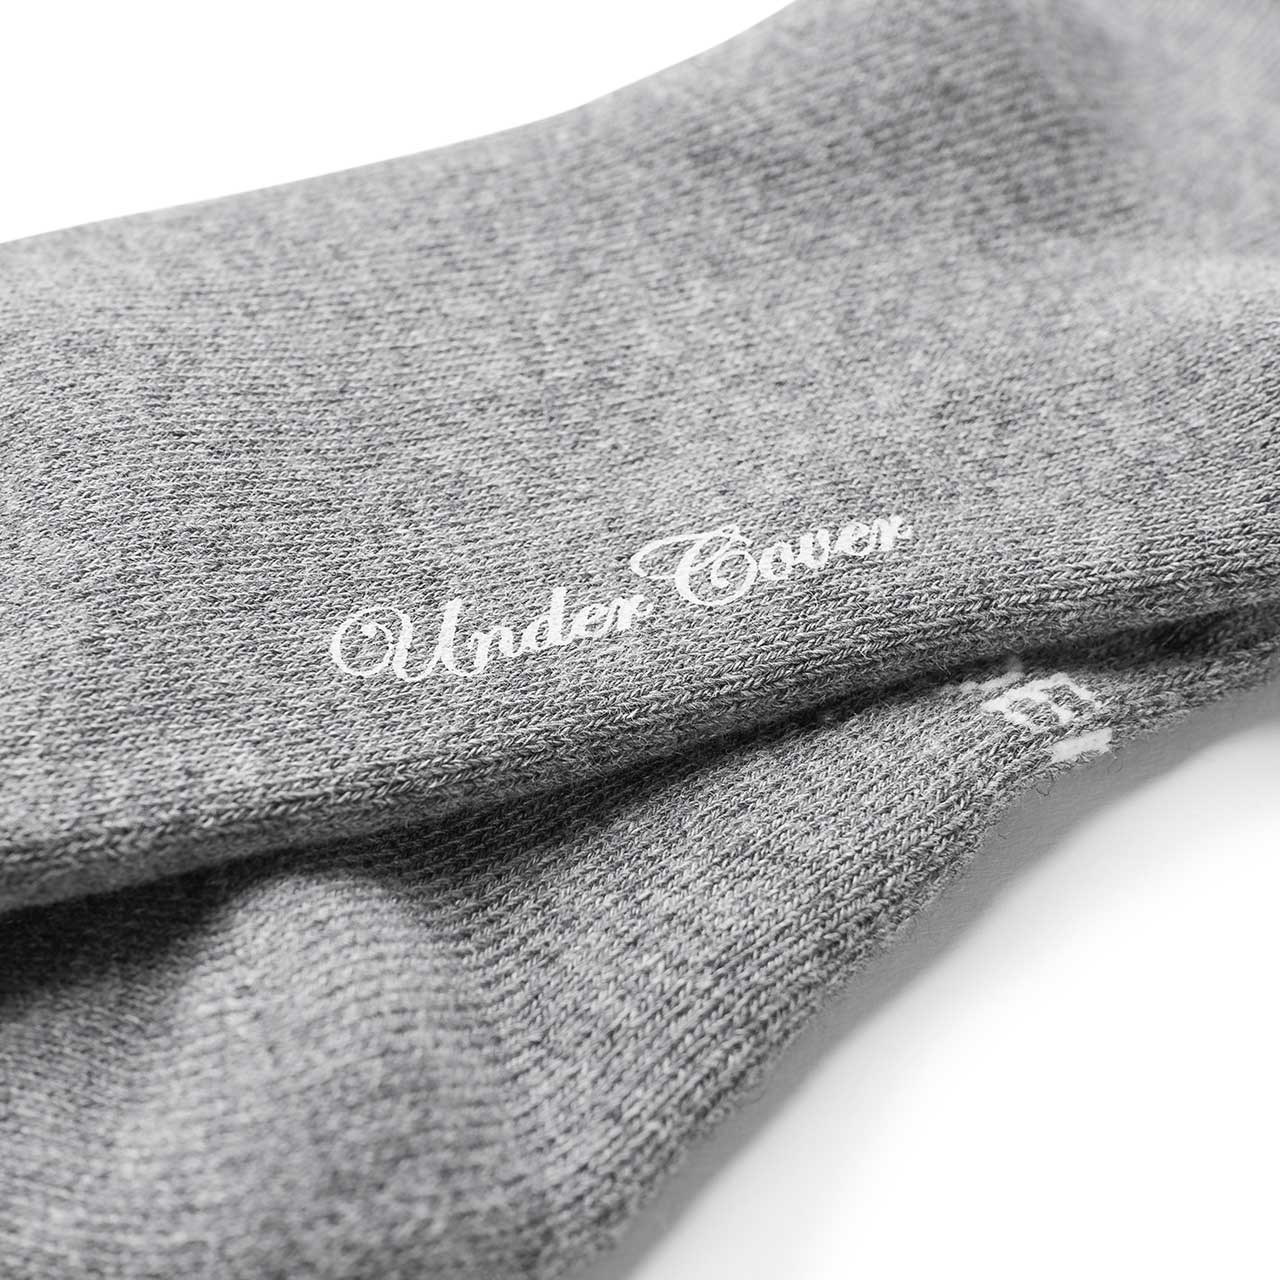 undercover undercover ucjq sneaker socks (grey) UCZ4L05-grey